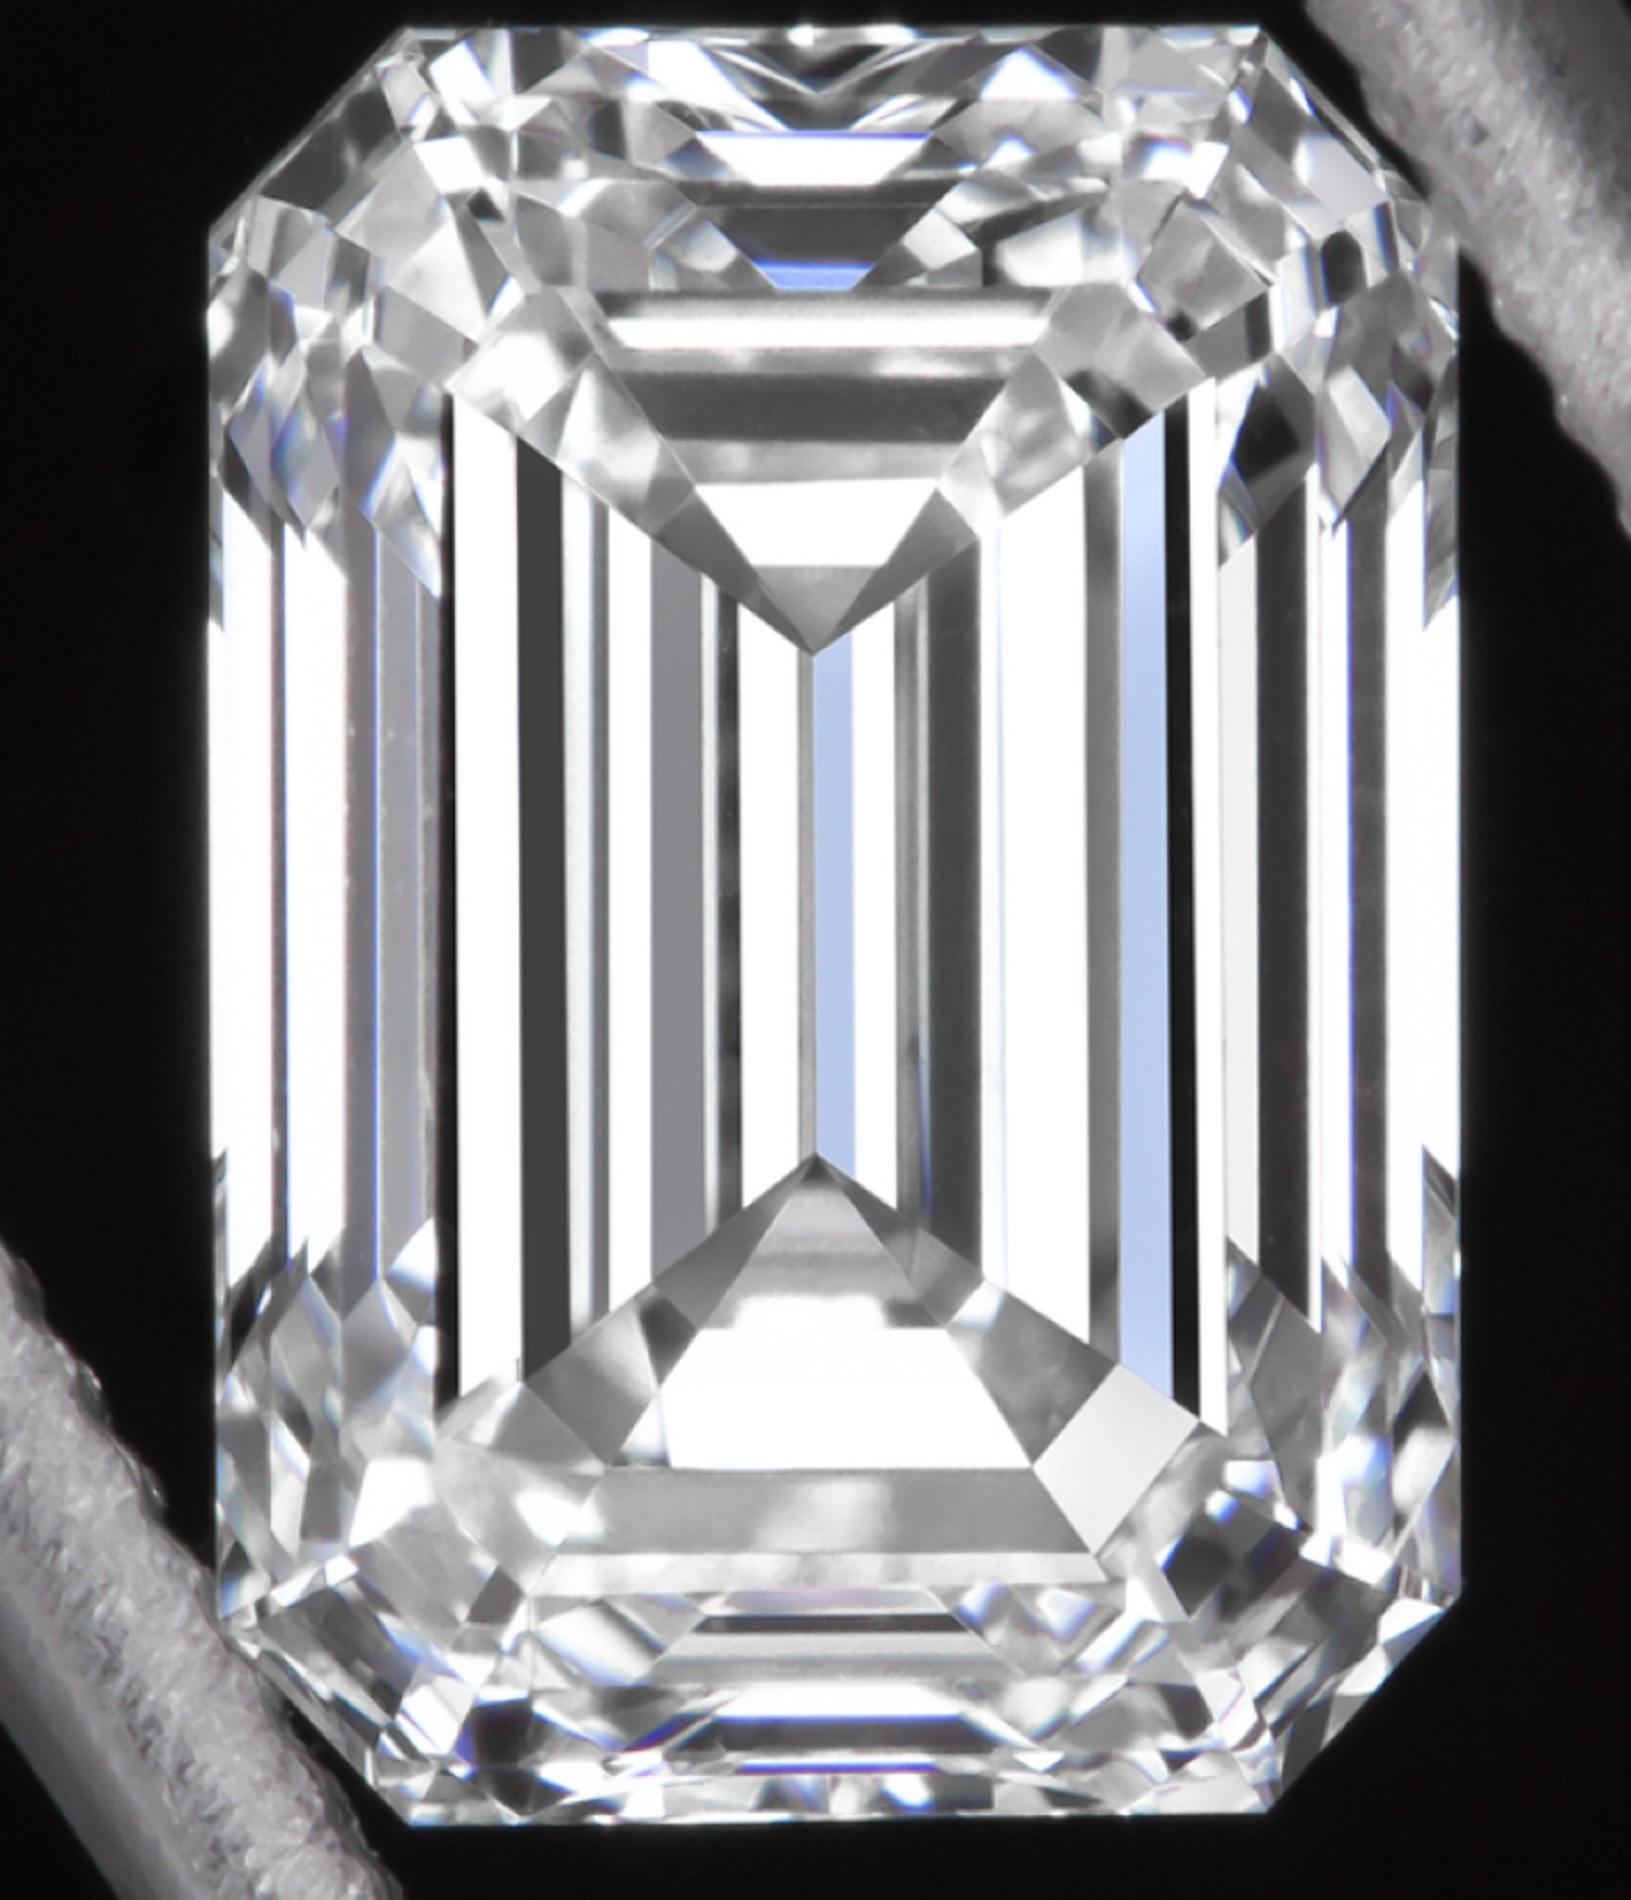 Exceptional Investment Grade 20 Carat Emerald Cut Diamond D Color 
Excellent Polish
Excellent Symmetry
None Fluorescence